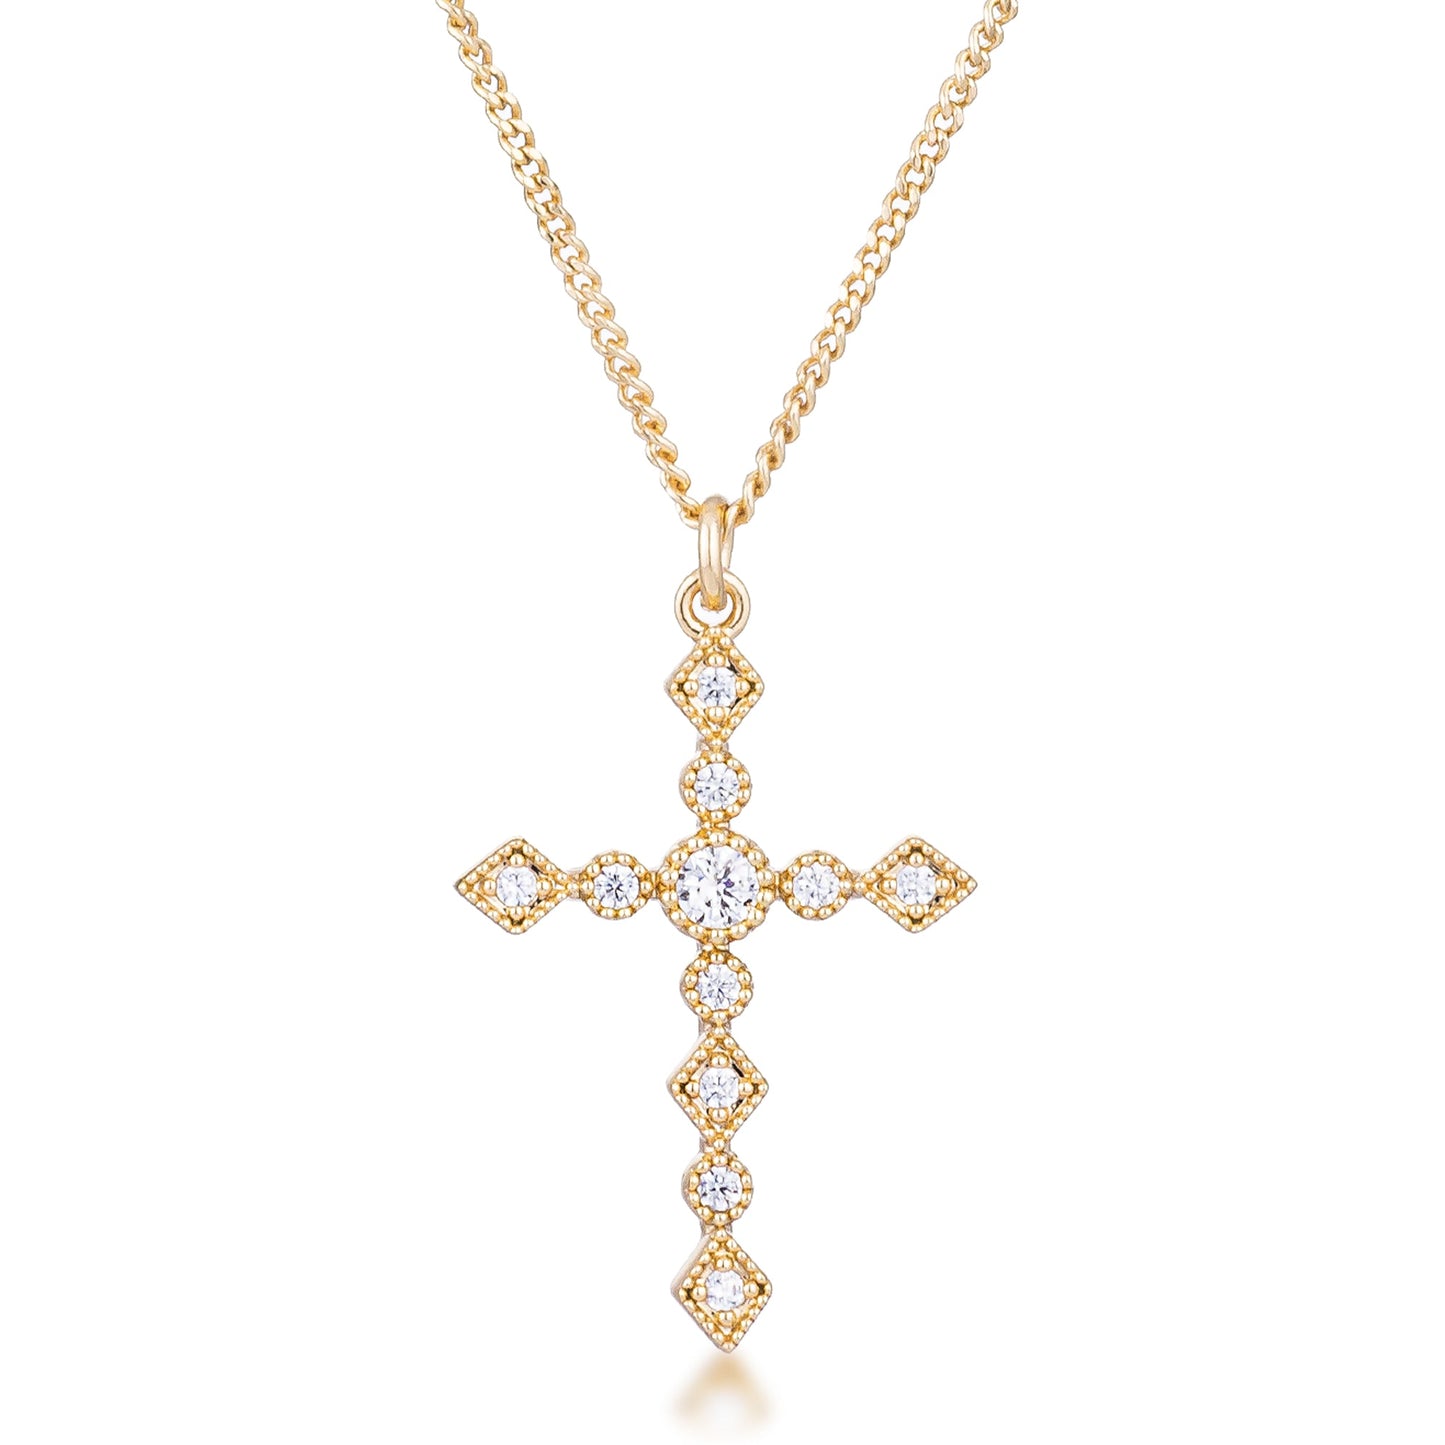 Dainty Art Deco Gold Plated Clear CZ Cross Pendant